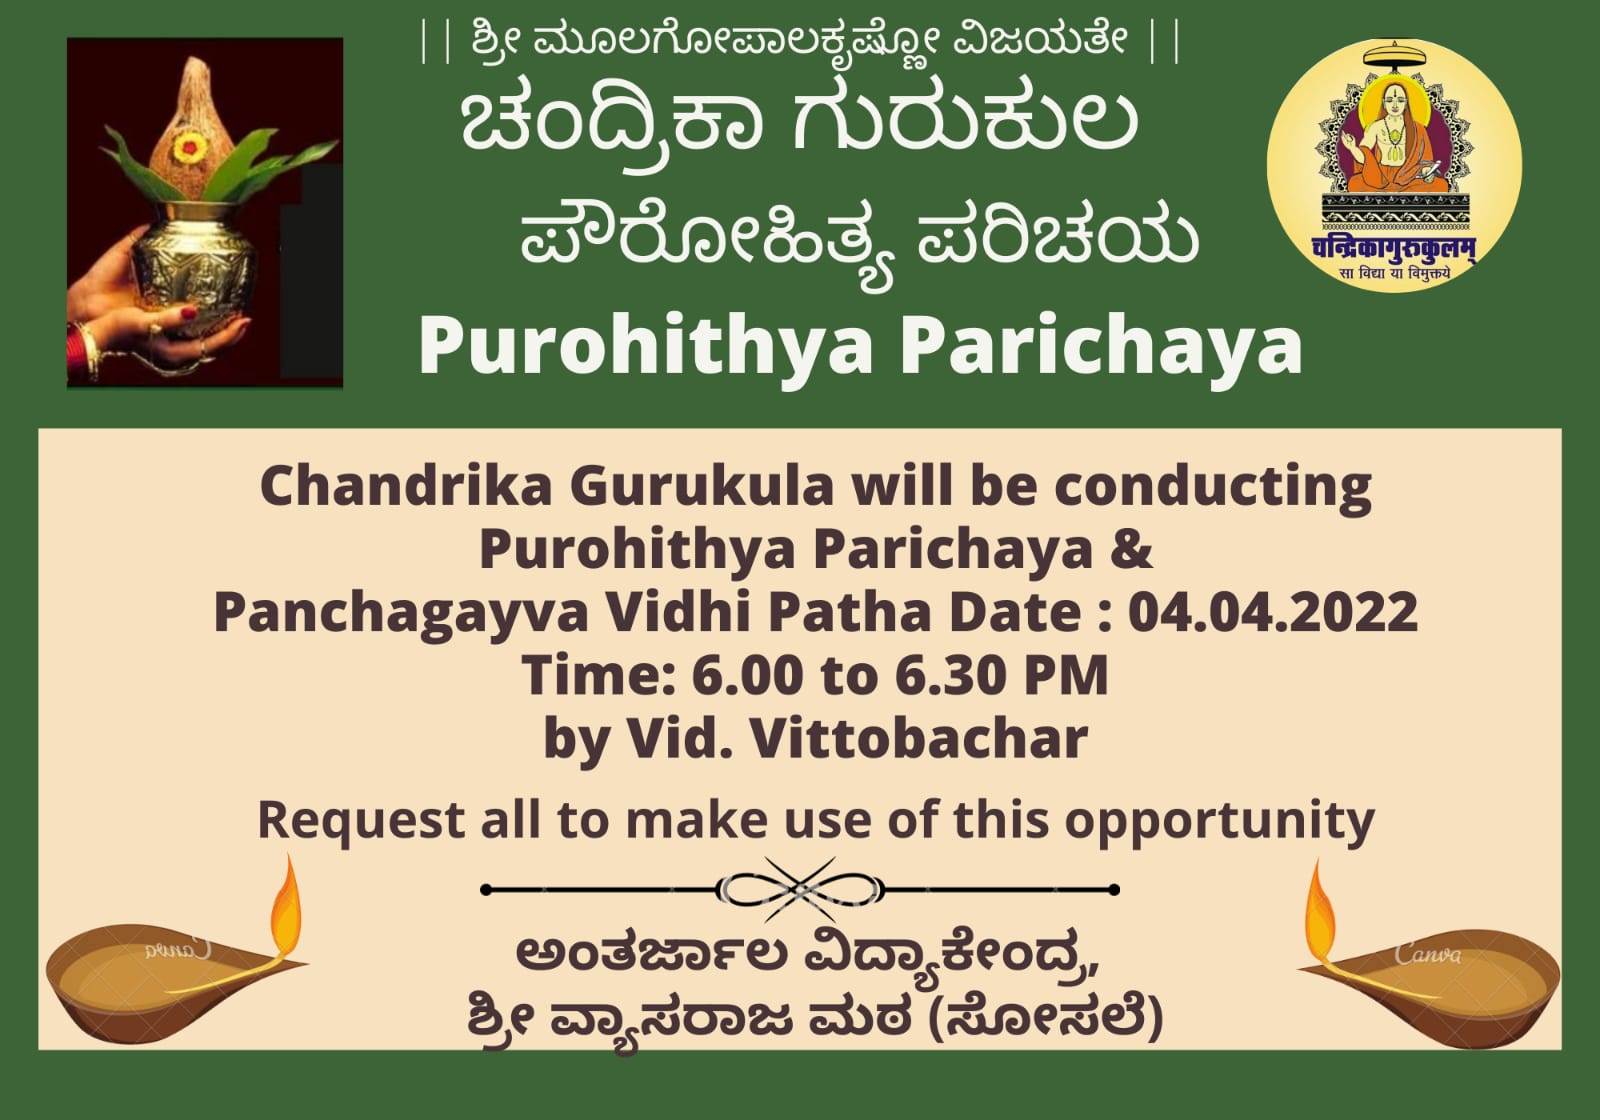 Purohithya parichaya and Panchagavya Vidhi patha